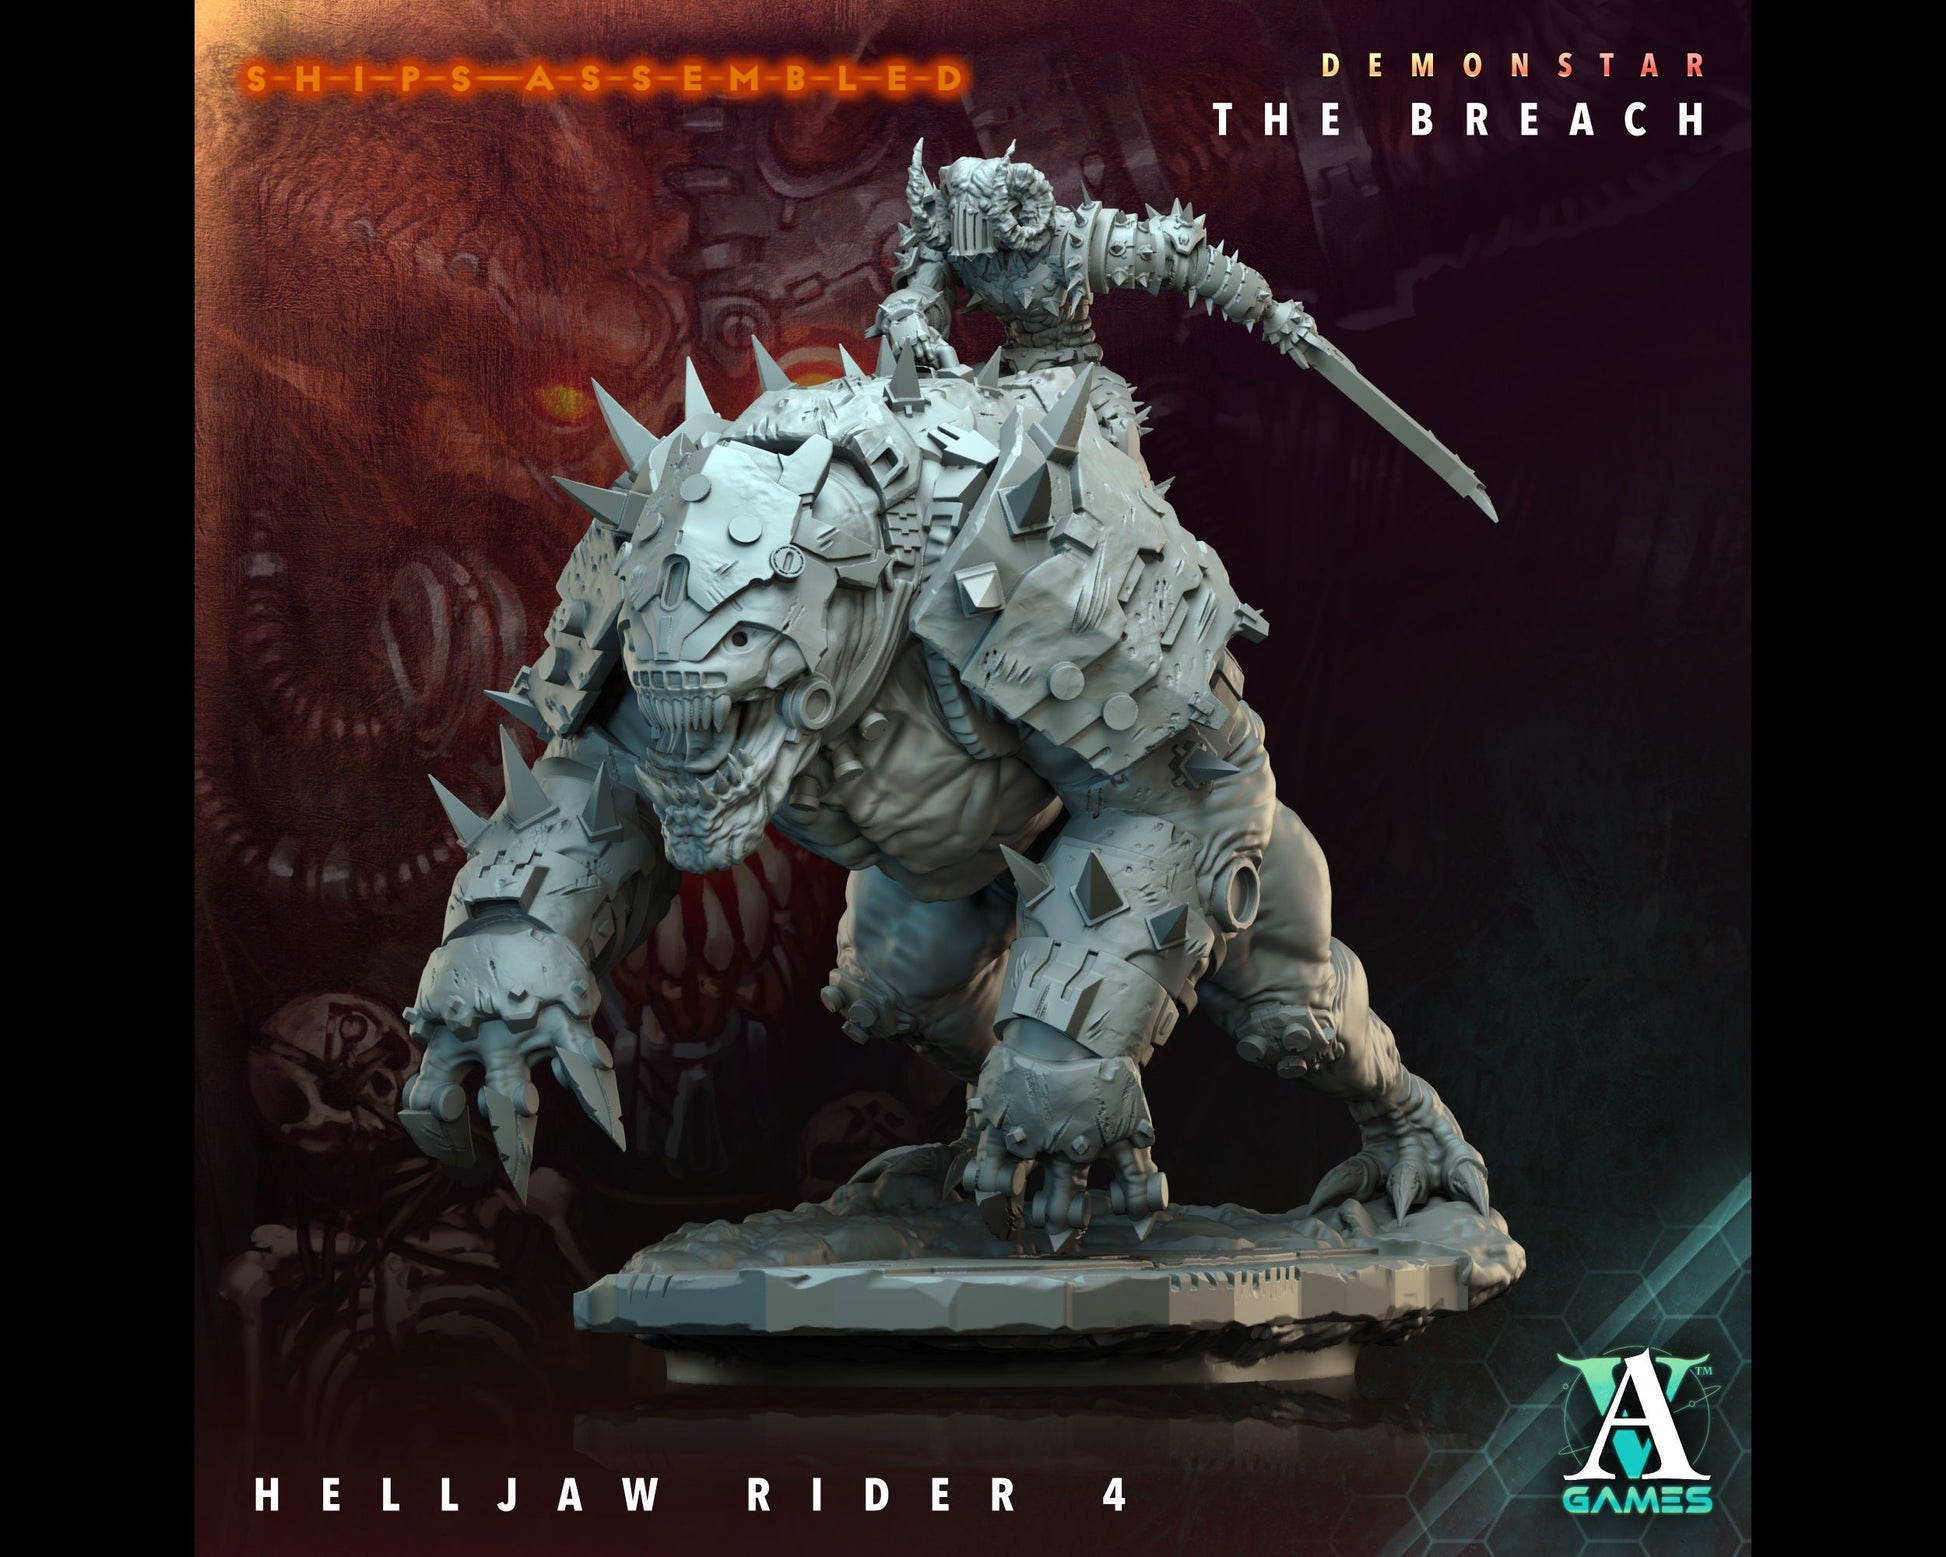 Helljaw Rider 4 - Demonstar: The Breach - Highly Detailed Resin 8k 3D Printed Miniature